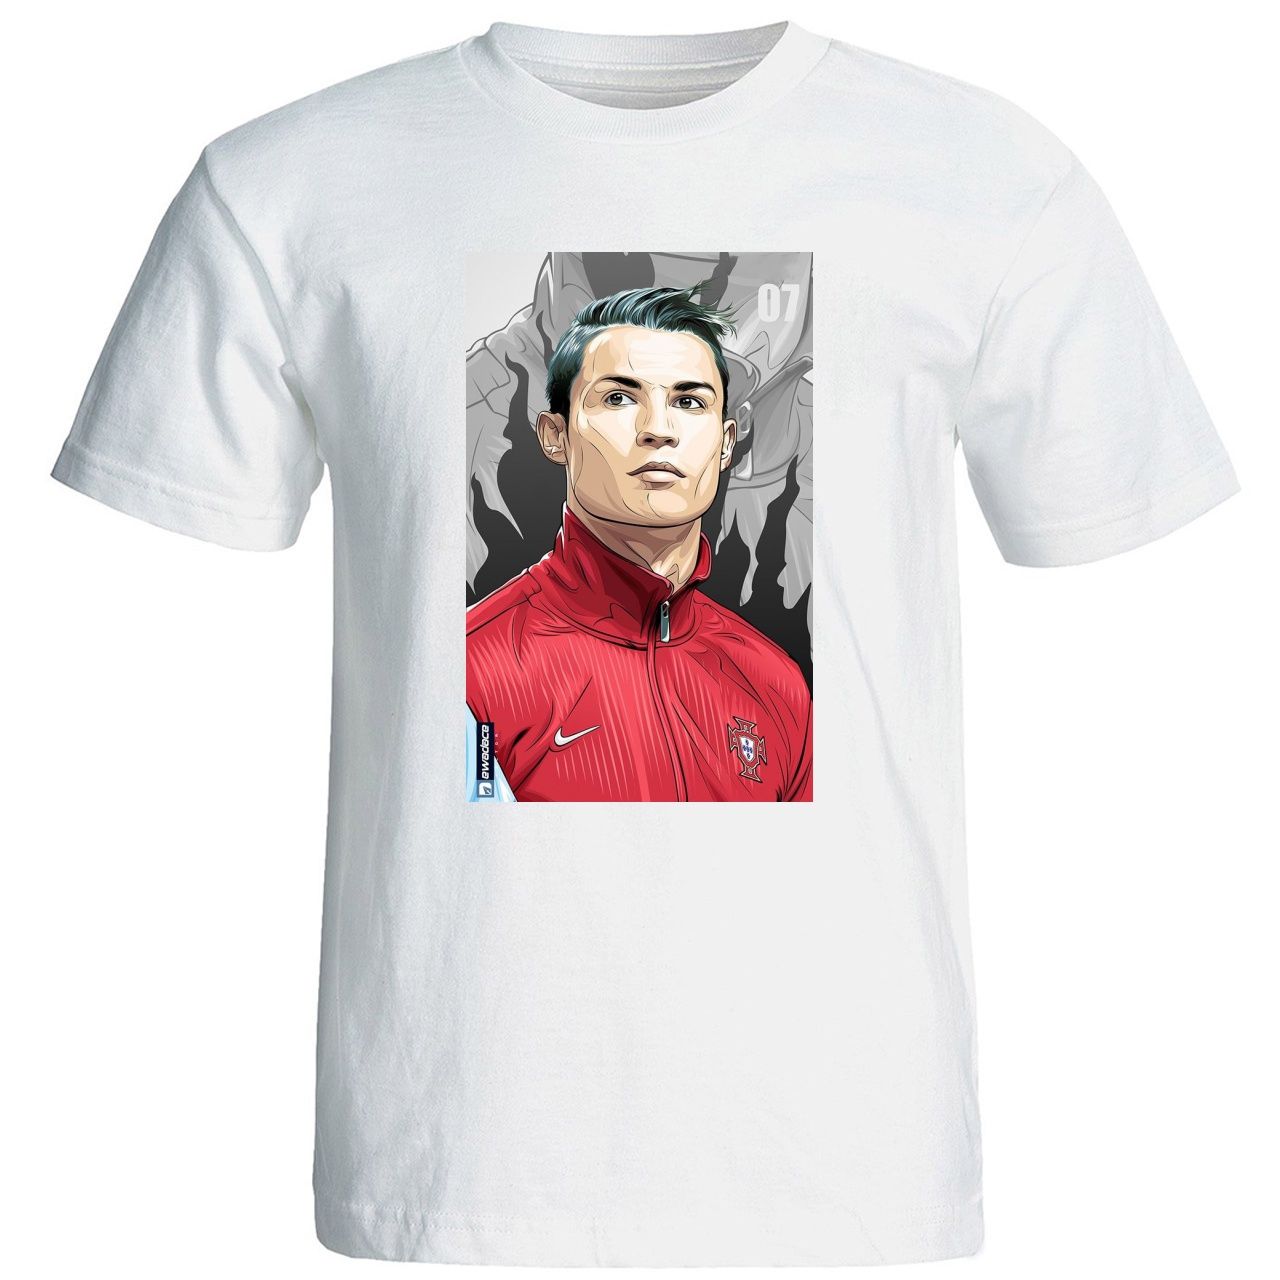 تی شرت مردانه رادیکال طرح رونالدو کد 3156 -  - 1